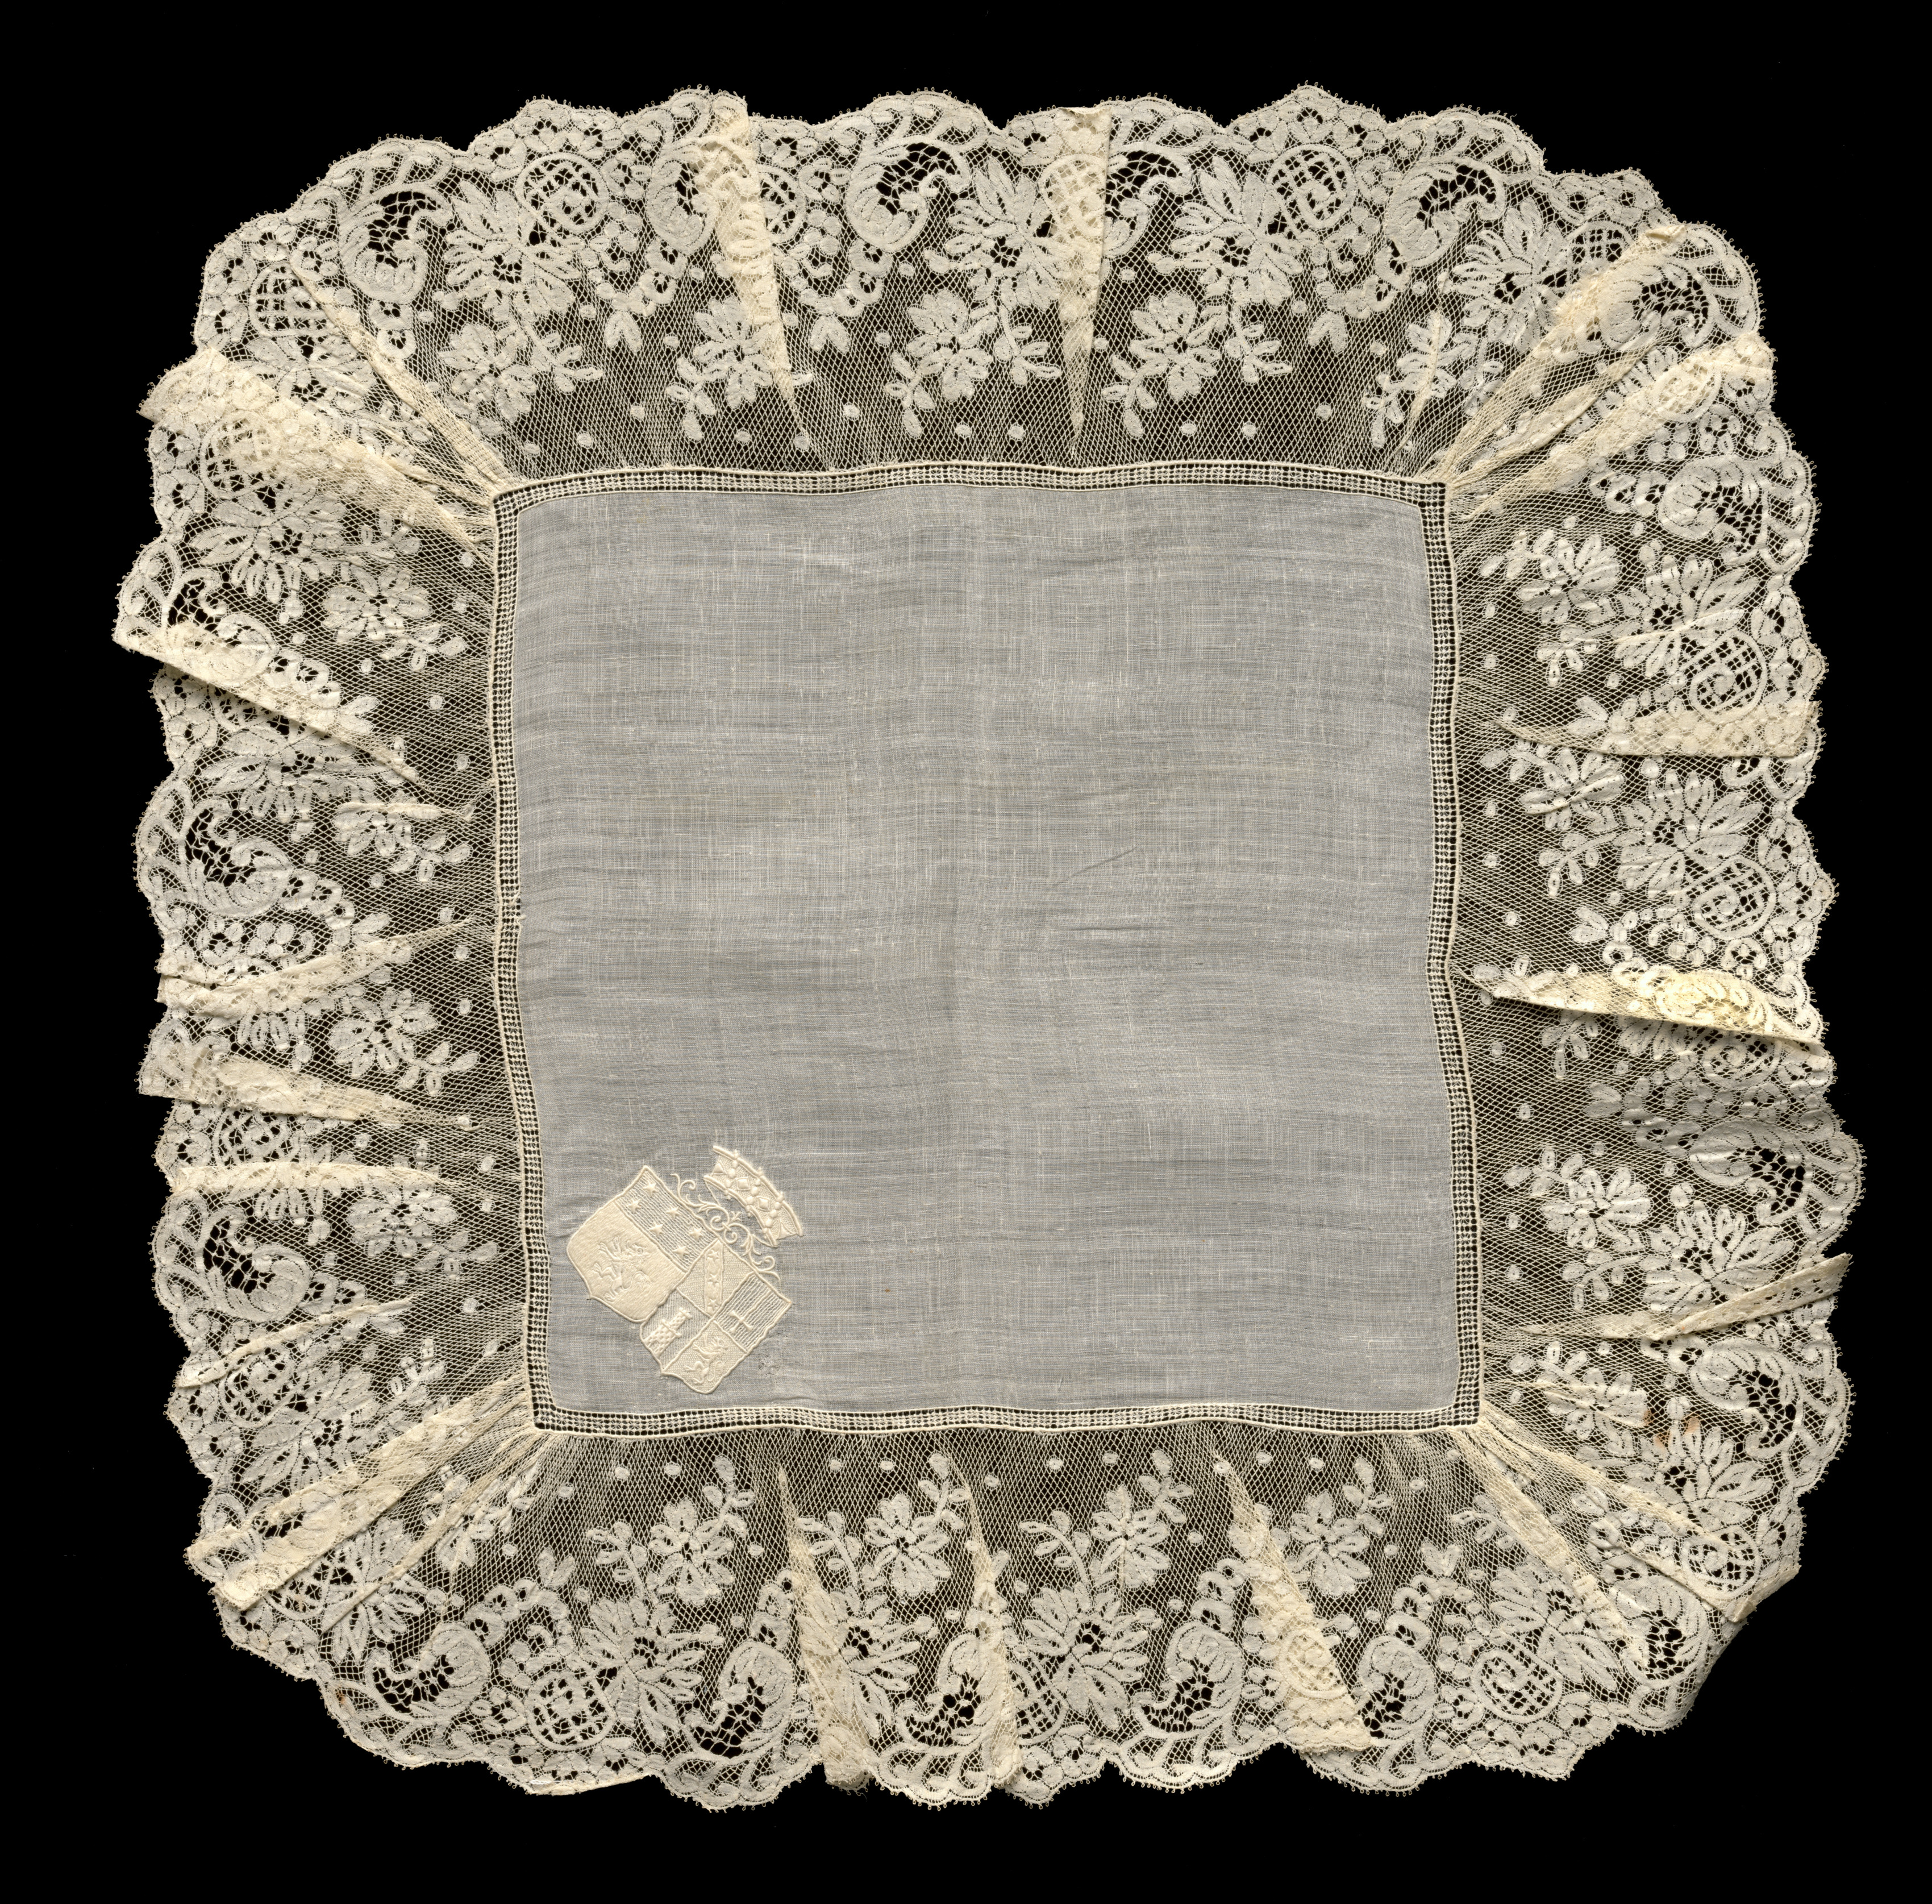 Embroidery and Bobbin Lace (Valenciennes) Handkerchief